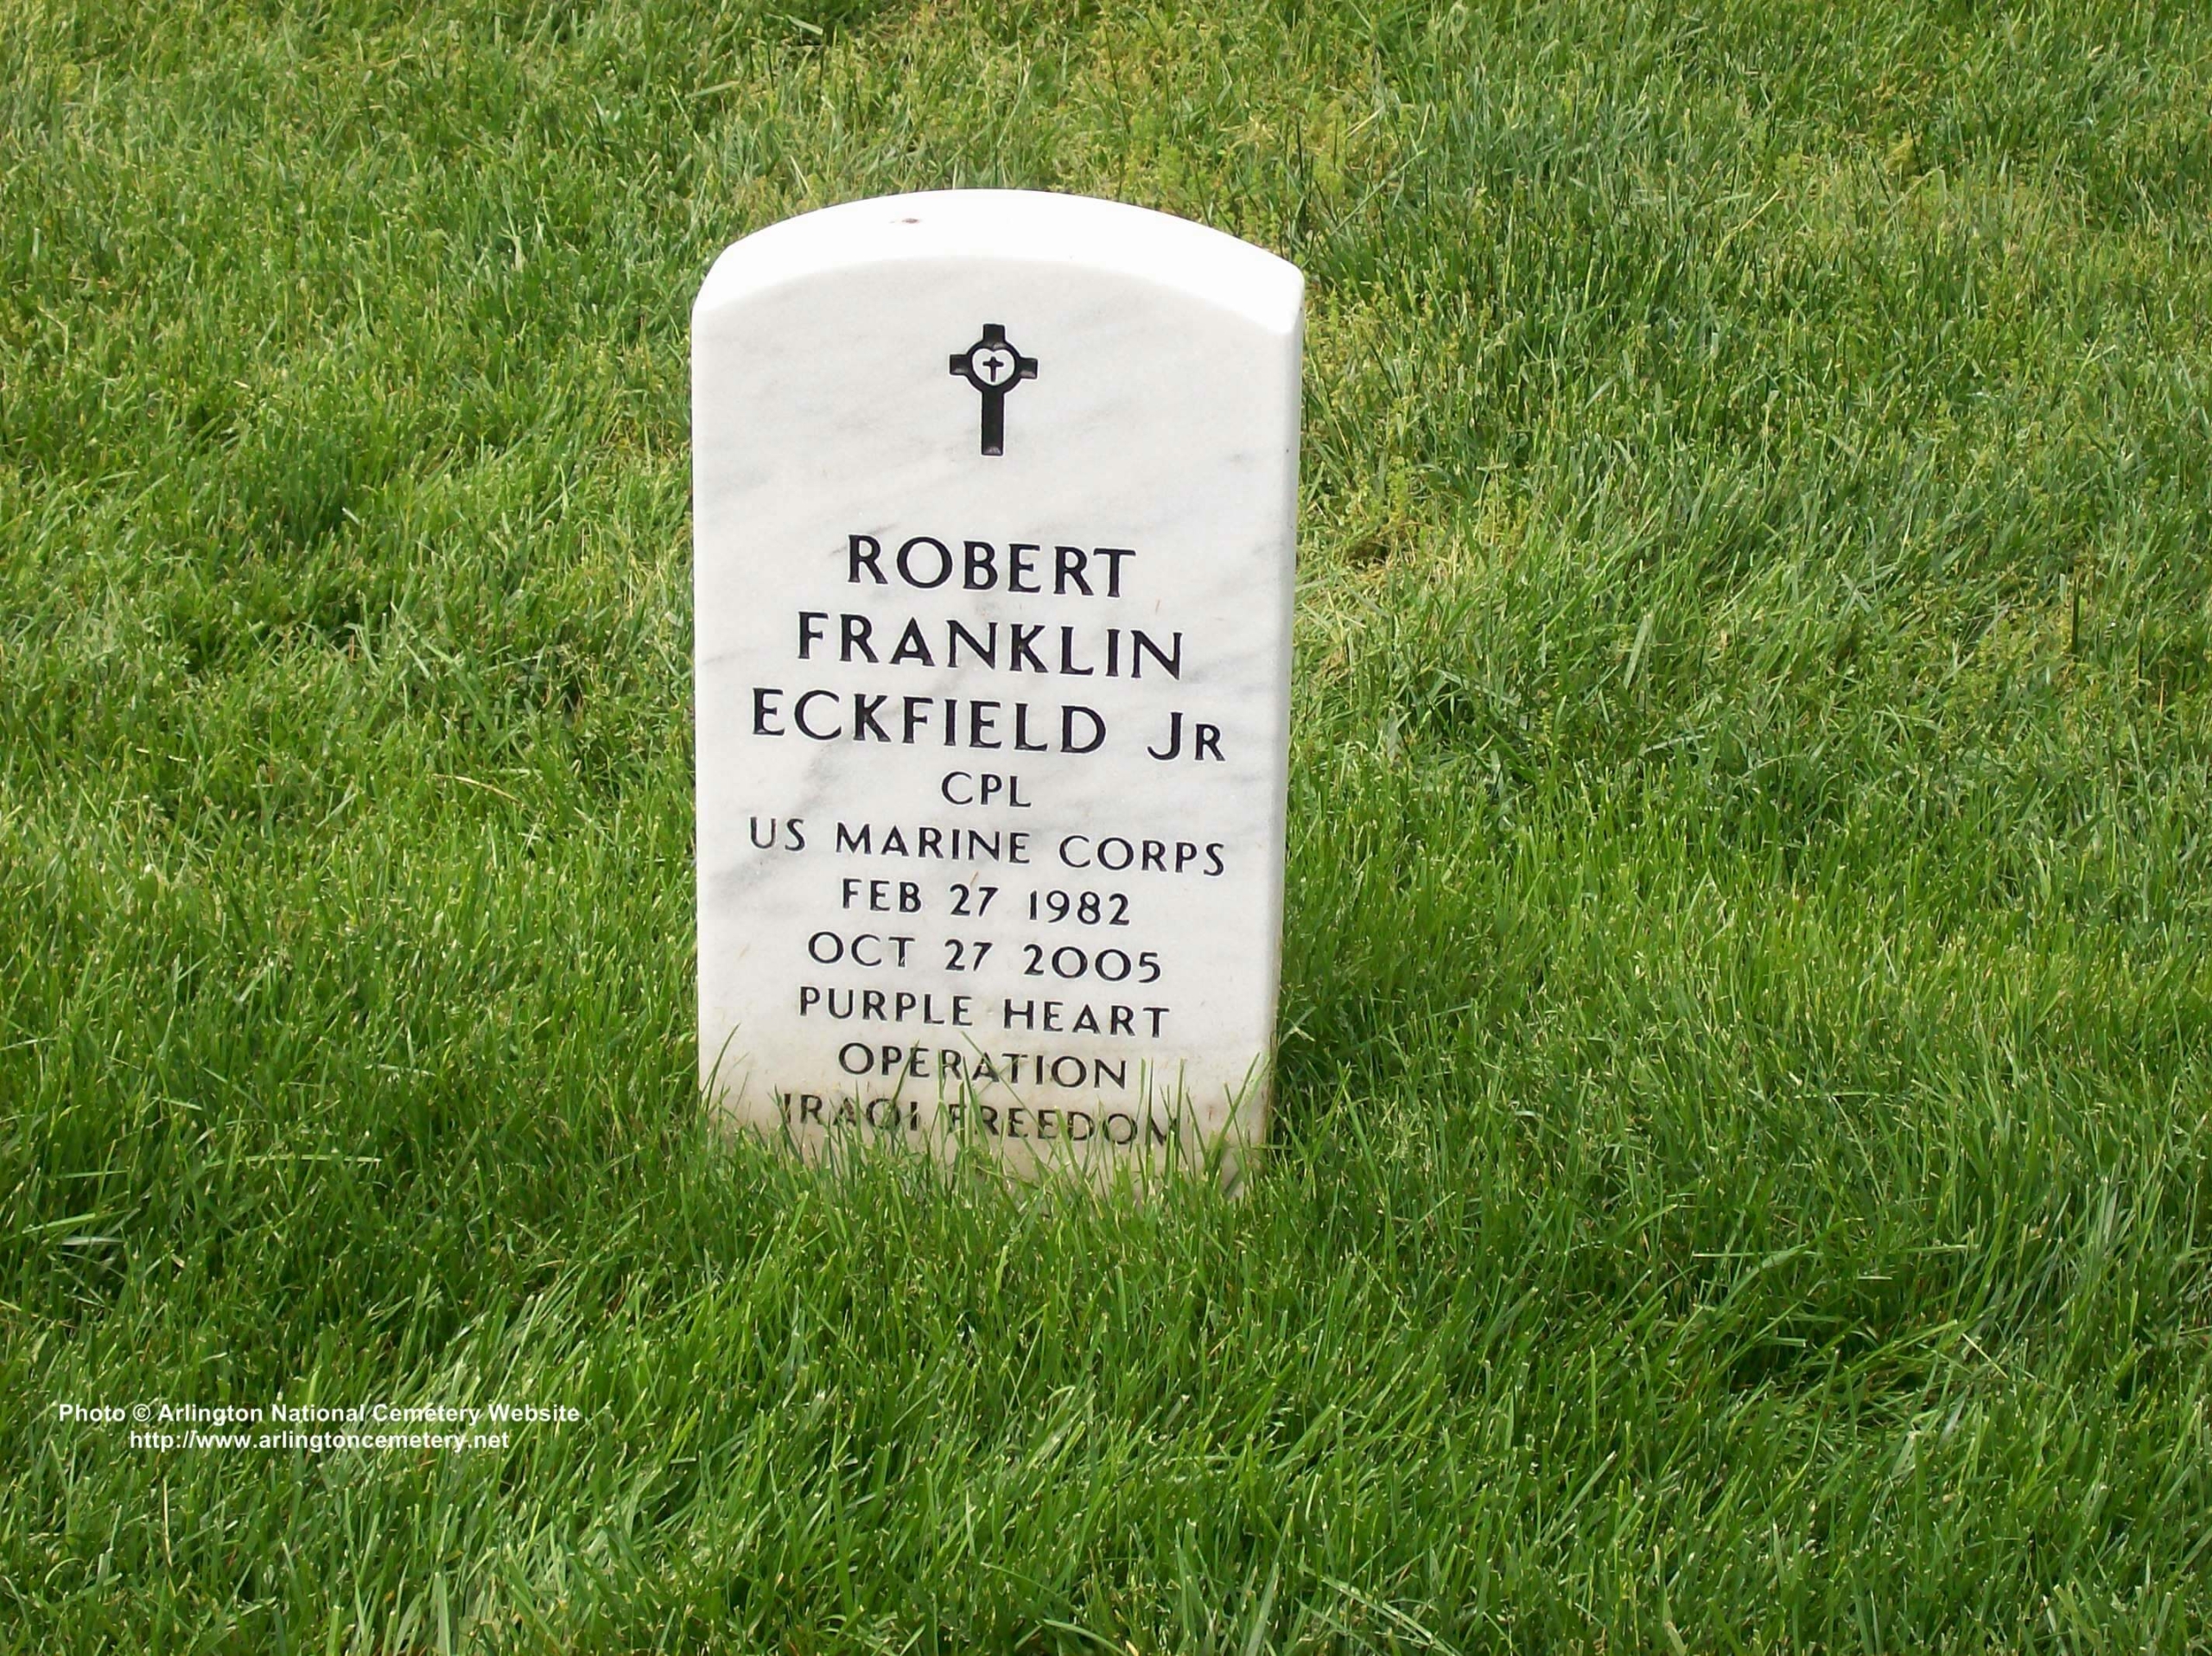 rfeckfieldjr-gravesite-photo-may-2008-001